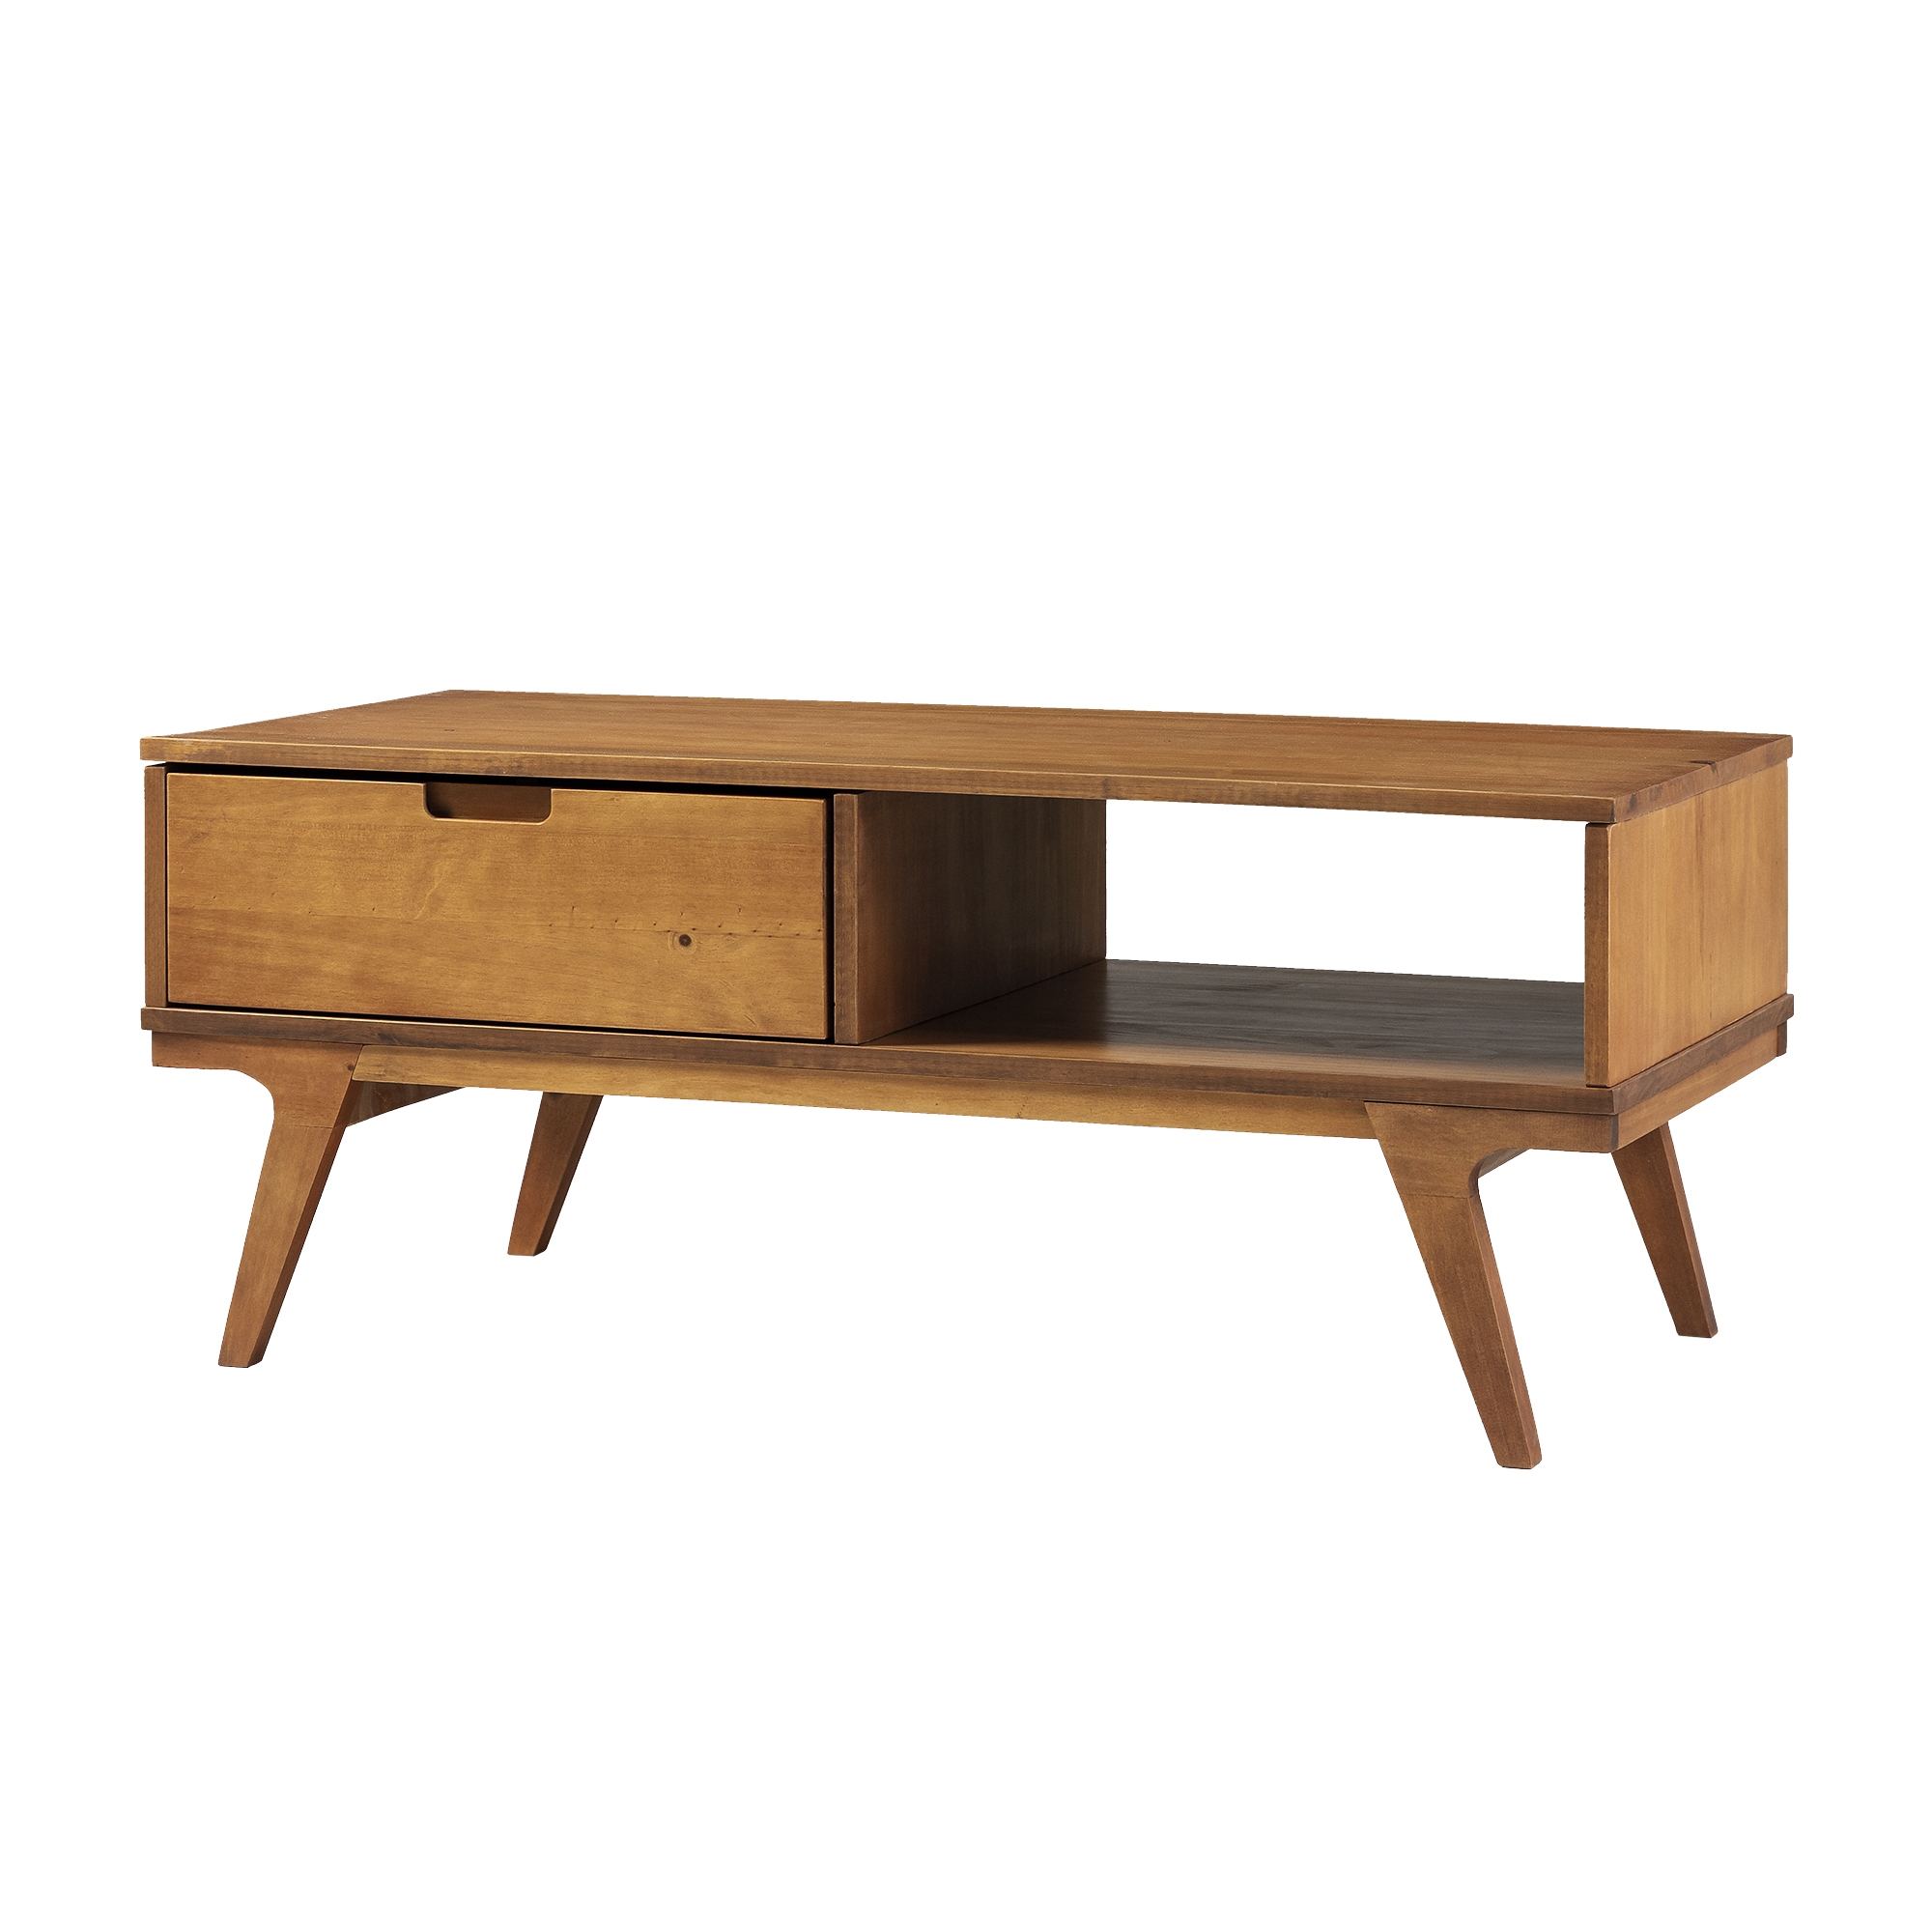 Mateo 1 Drawer Bridge Leg Solid Wood Coffee Table - Caramel - Image 2